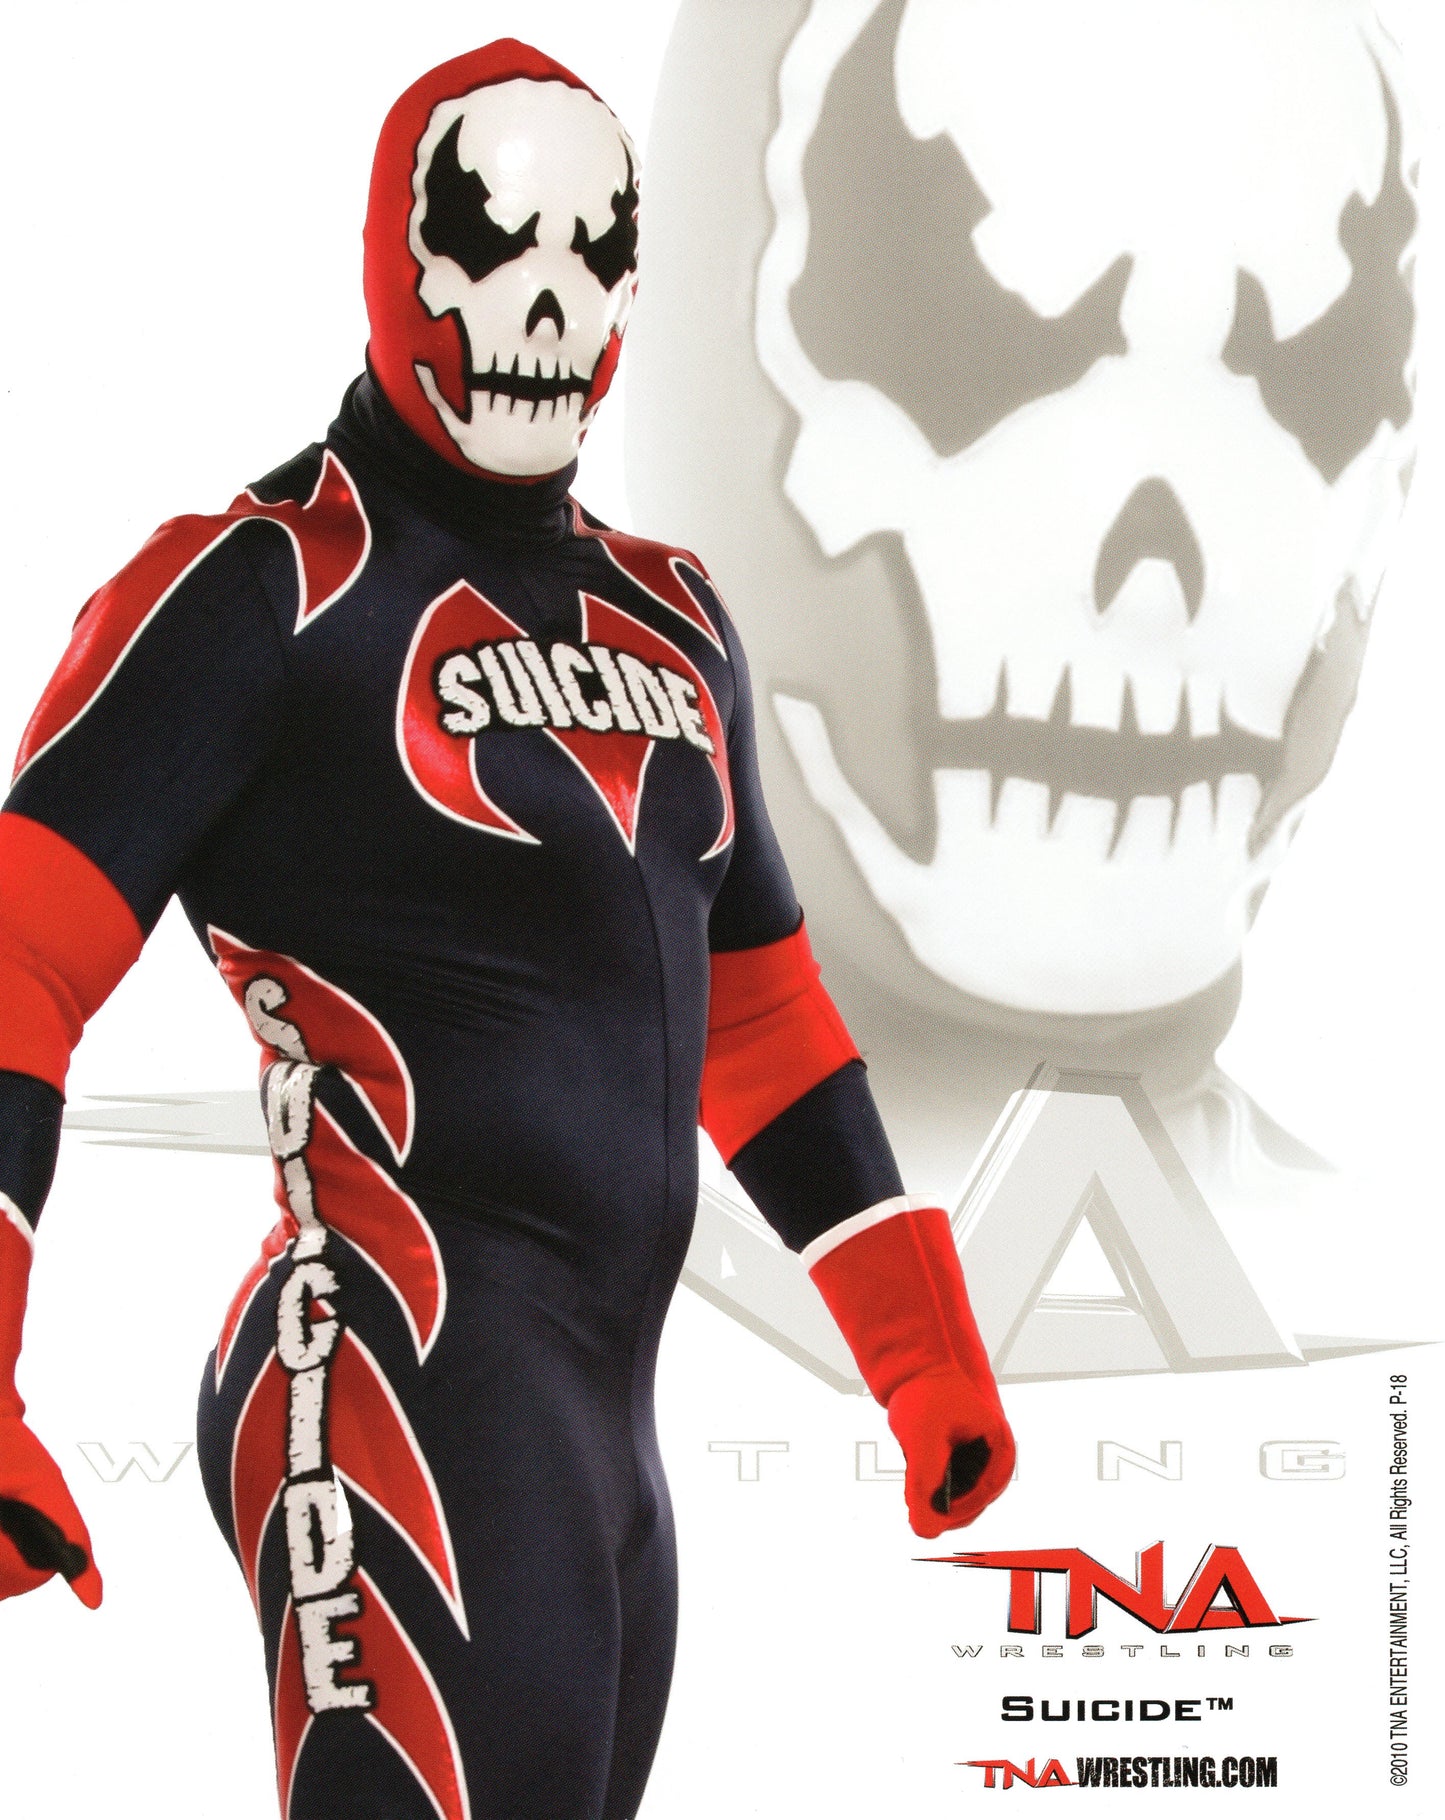 Suicide TNA 8x10" Promo Photo P-18